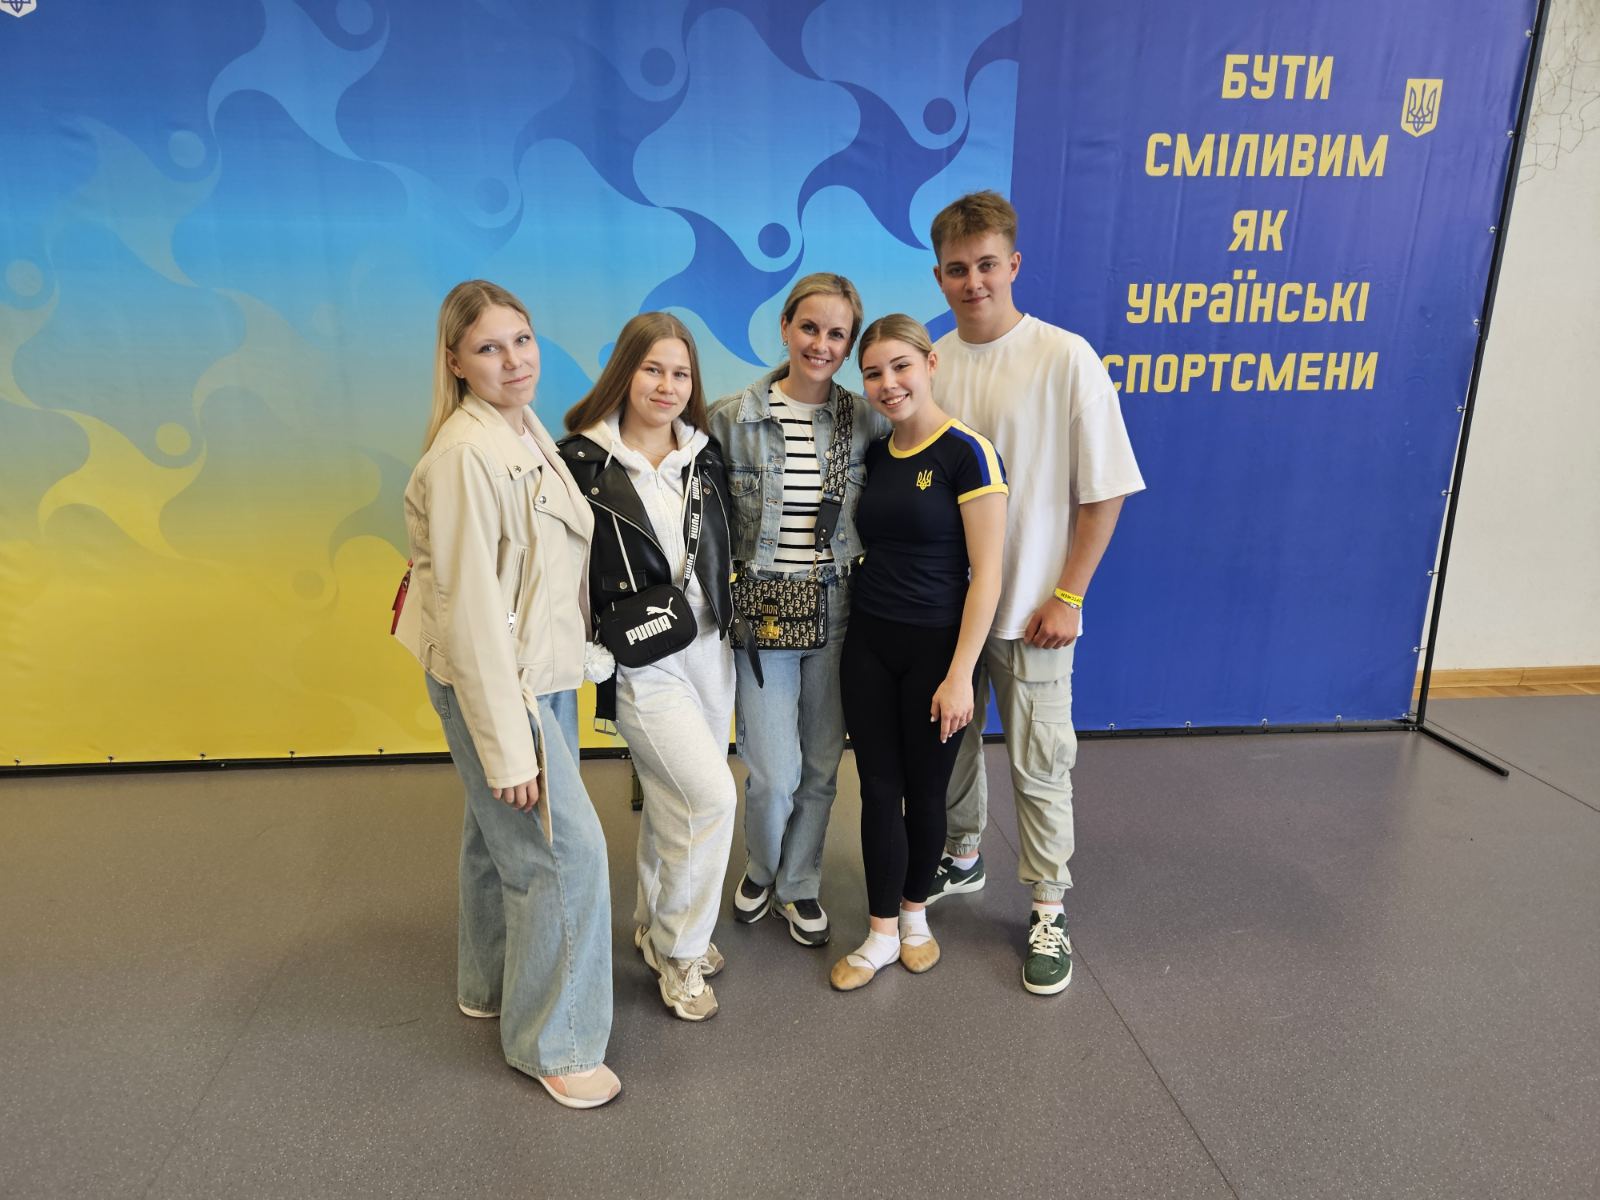 Polytechnic cheerleaders win the awards of the Cheerleading Championship of Ukraine among Schoolchildren and Students